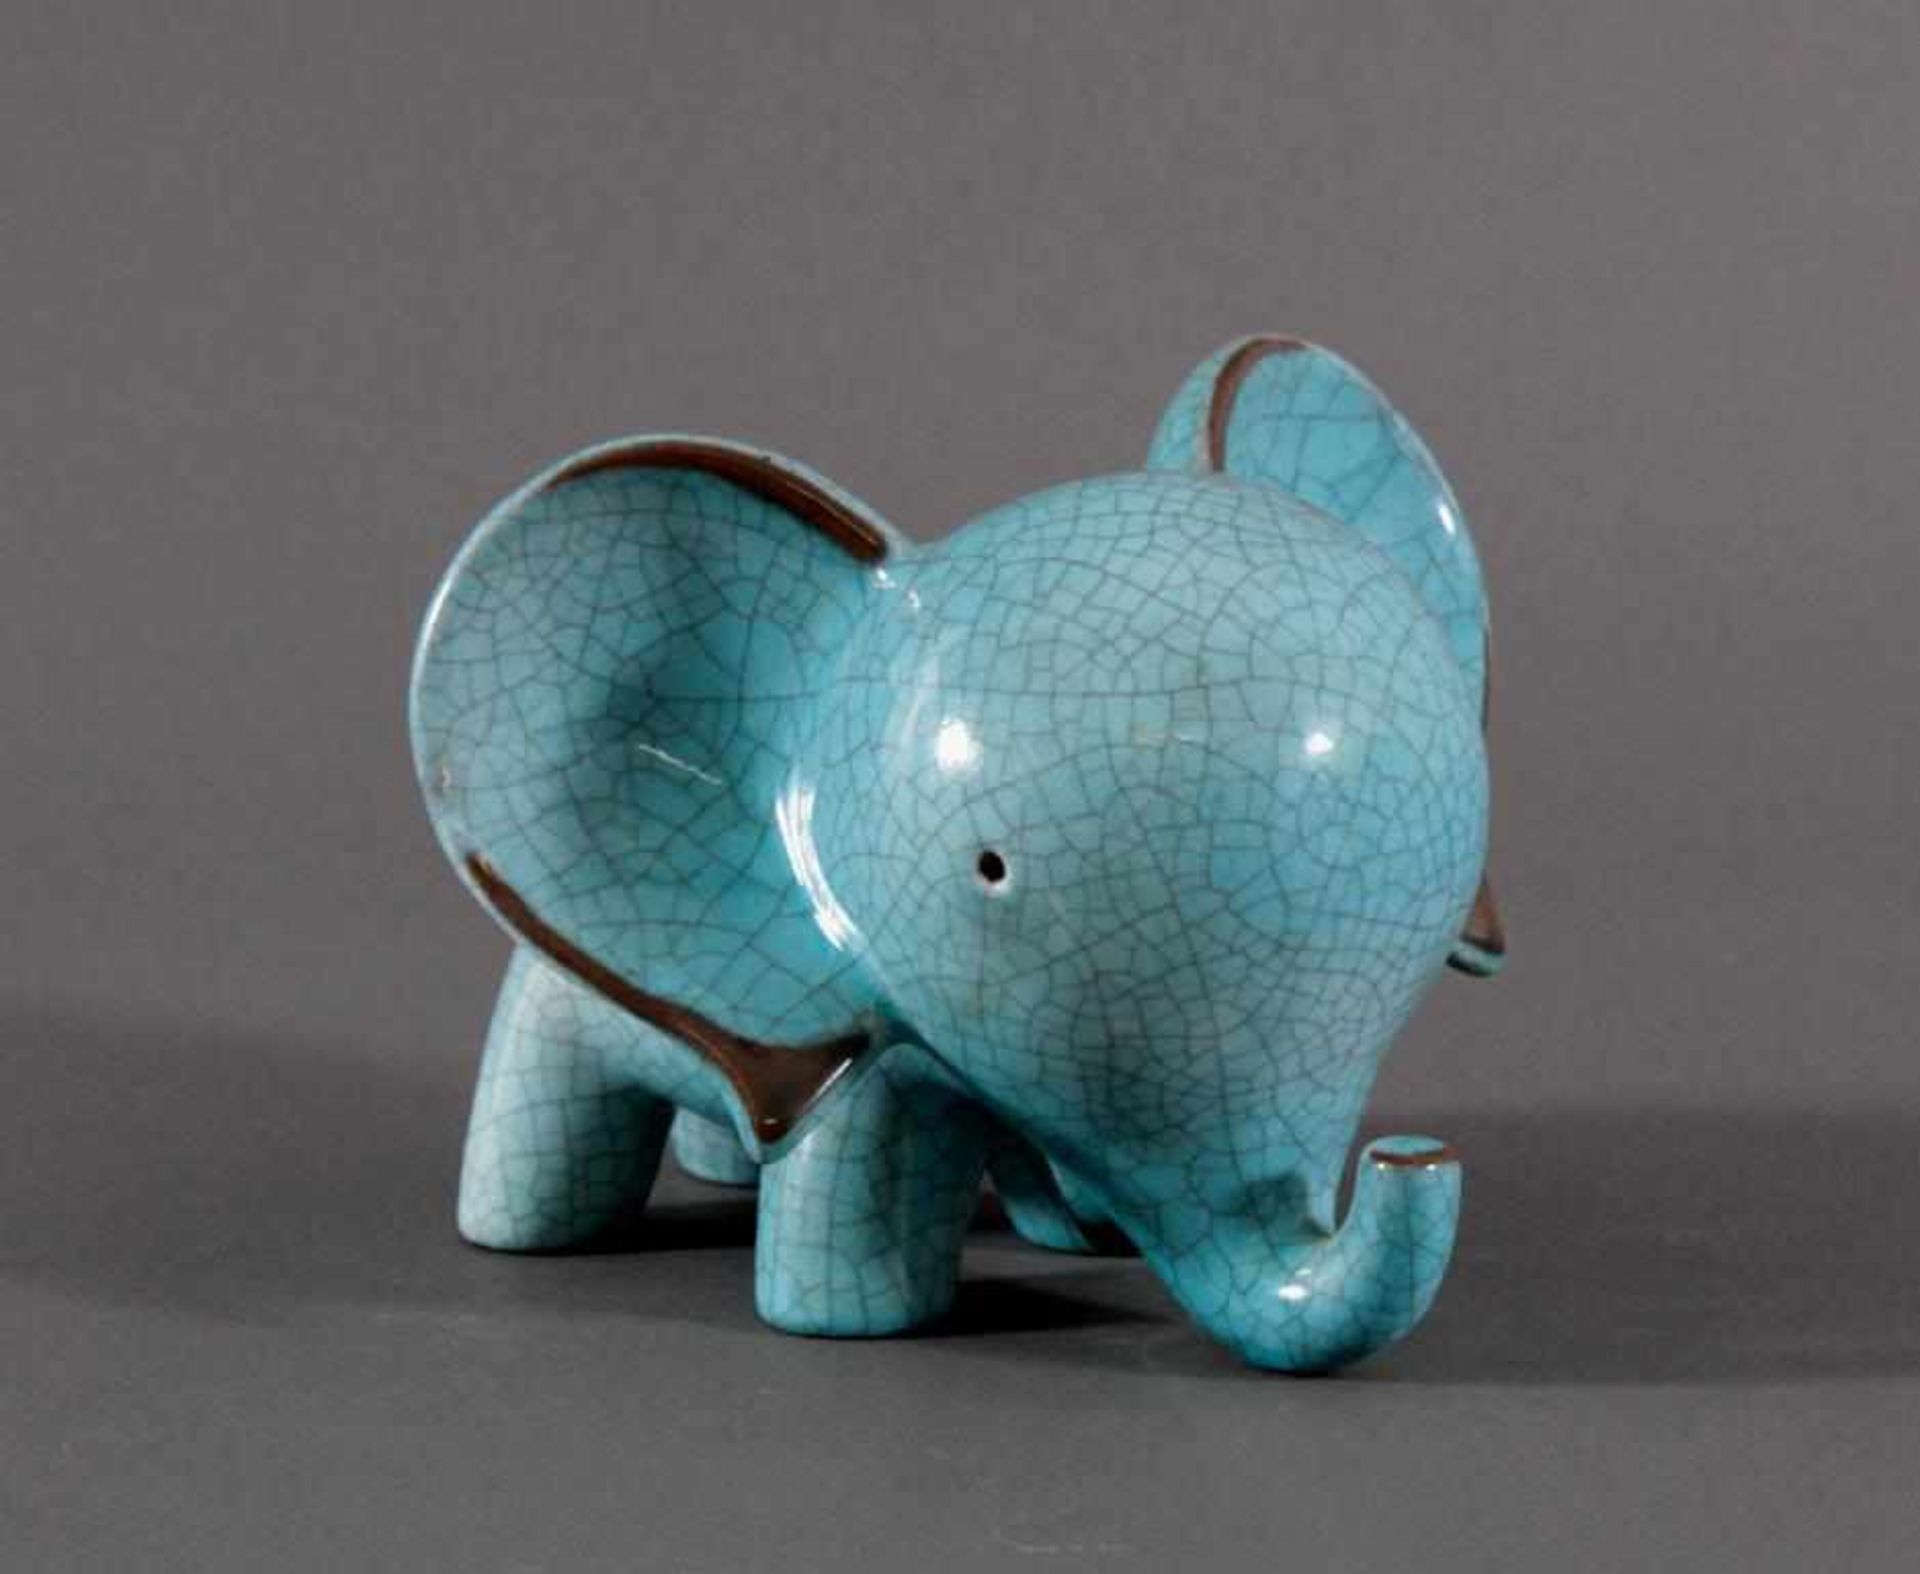 Keramik-Miniaturtierplastik, "Elefant", Karlsruher Majolika, um 1956-88, Entw.: Walter